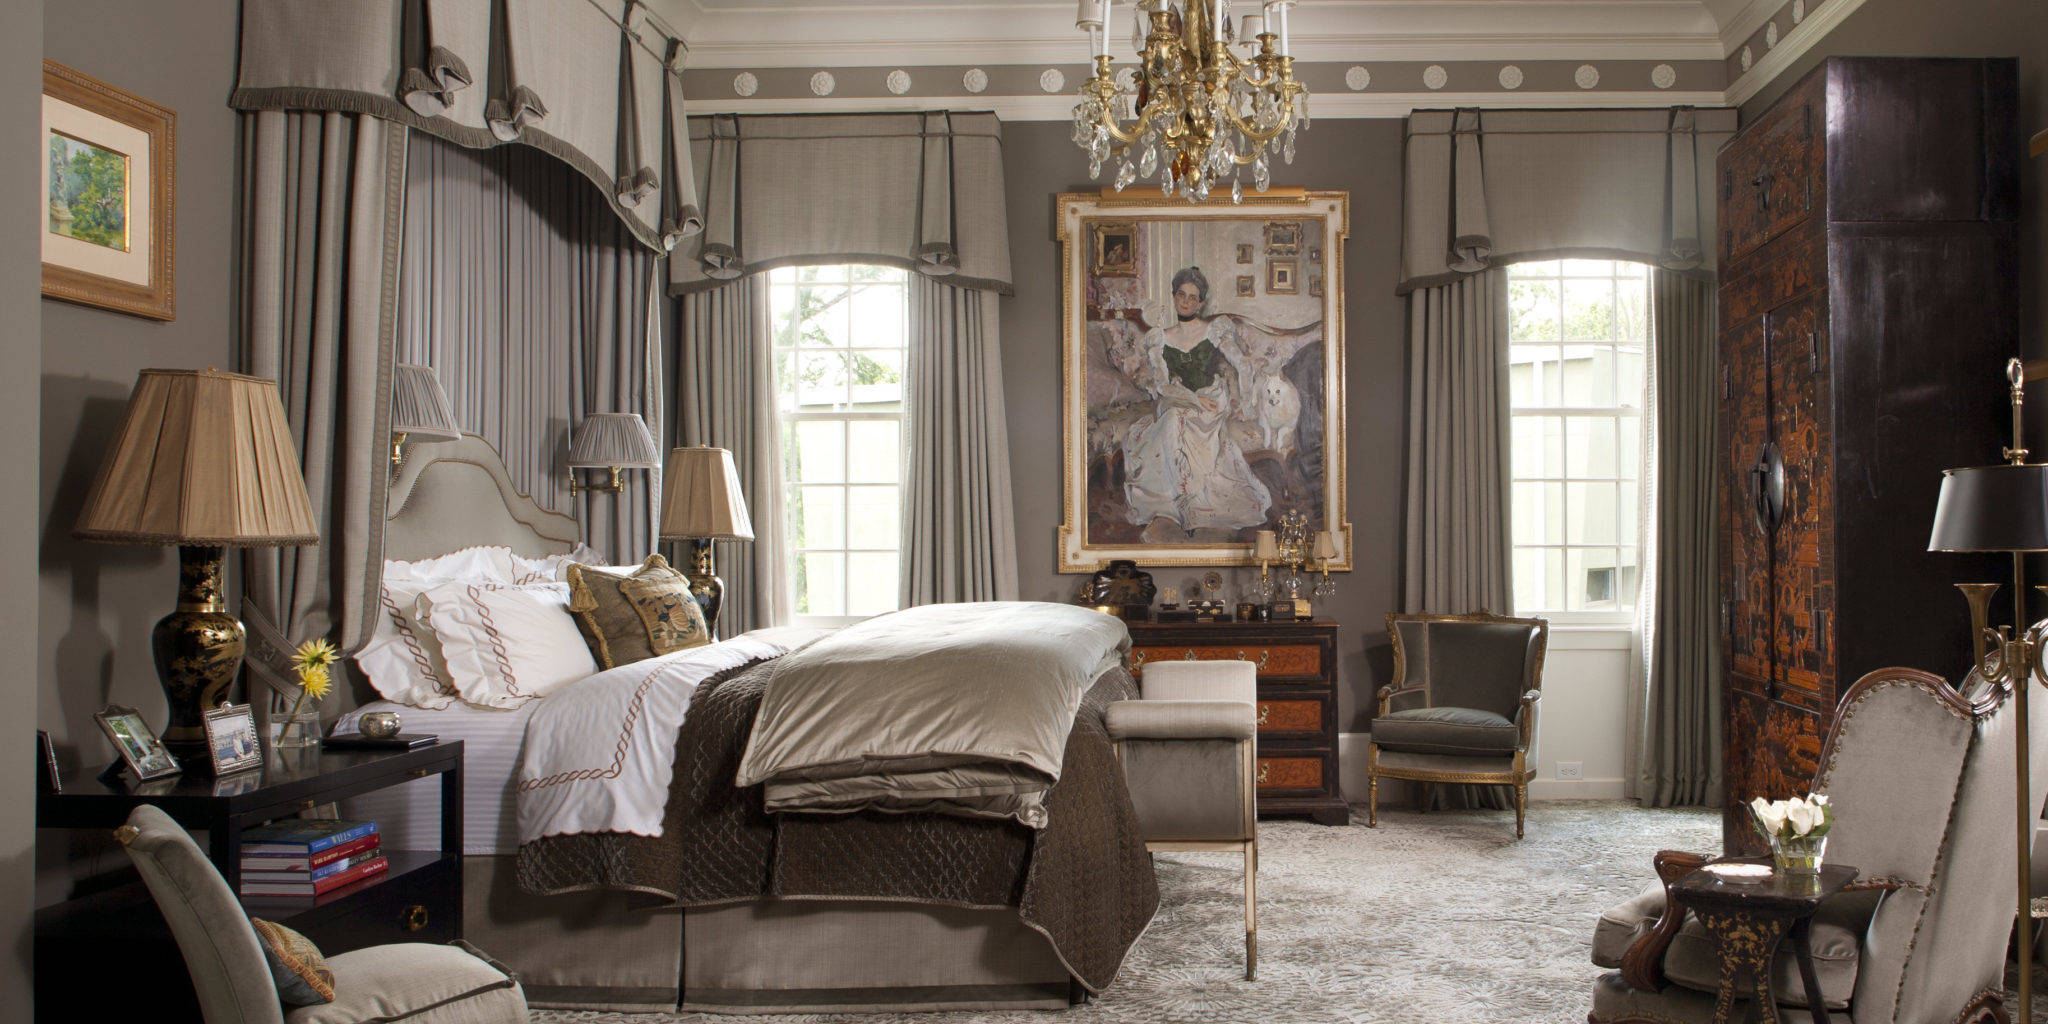 Elegant gray and gold bedroom interior design